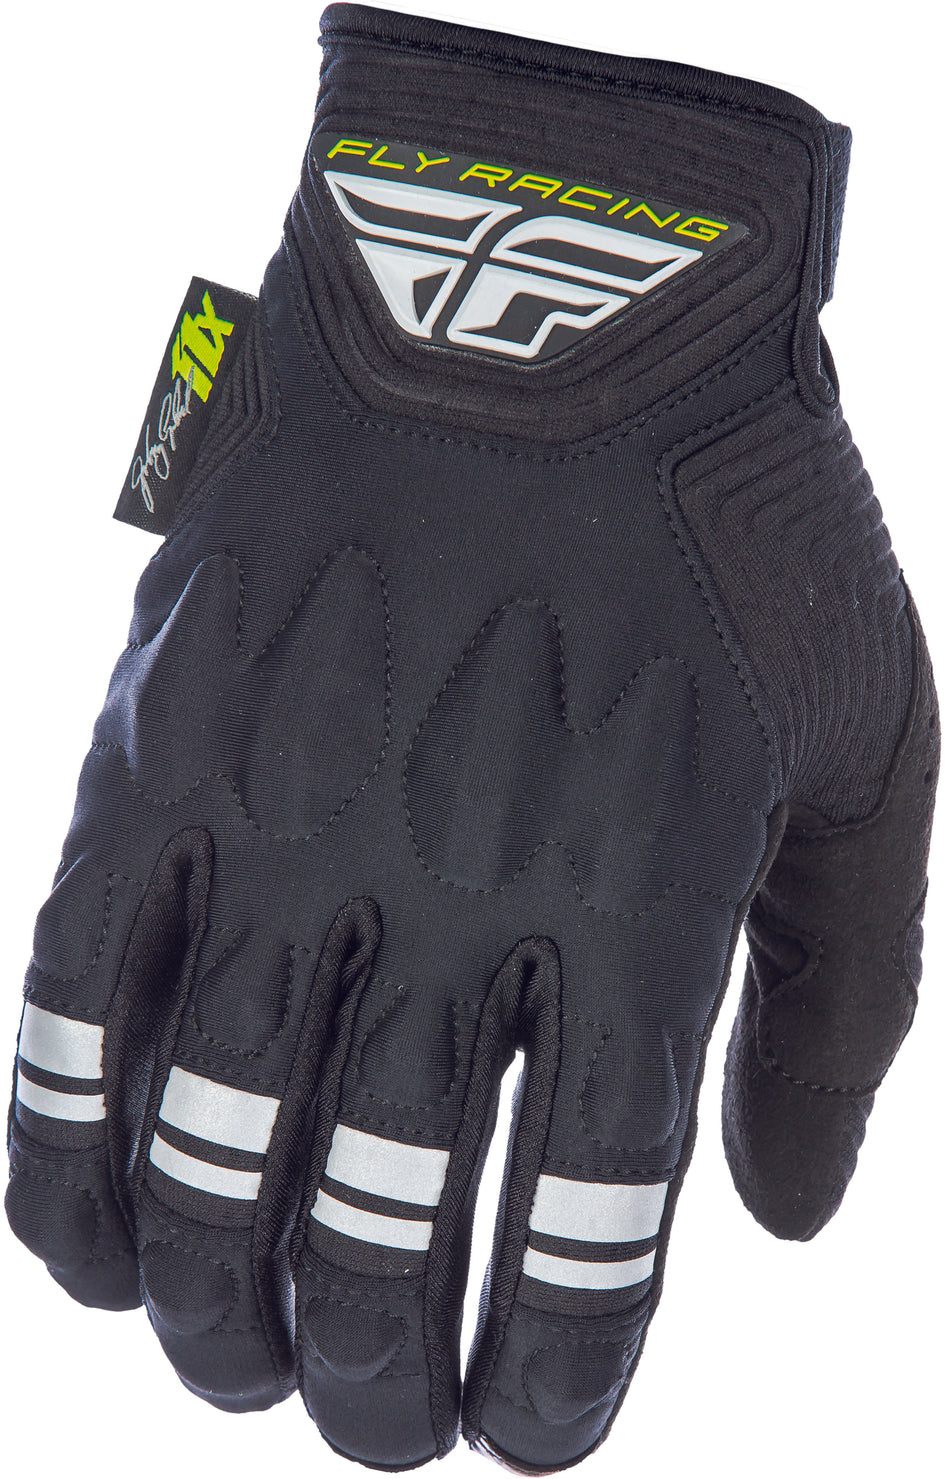 FLY RACING Johnny Campbell Sig Patrol Xc Lite Gloves Black/Grey 370-68012